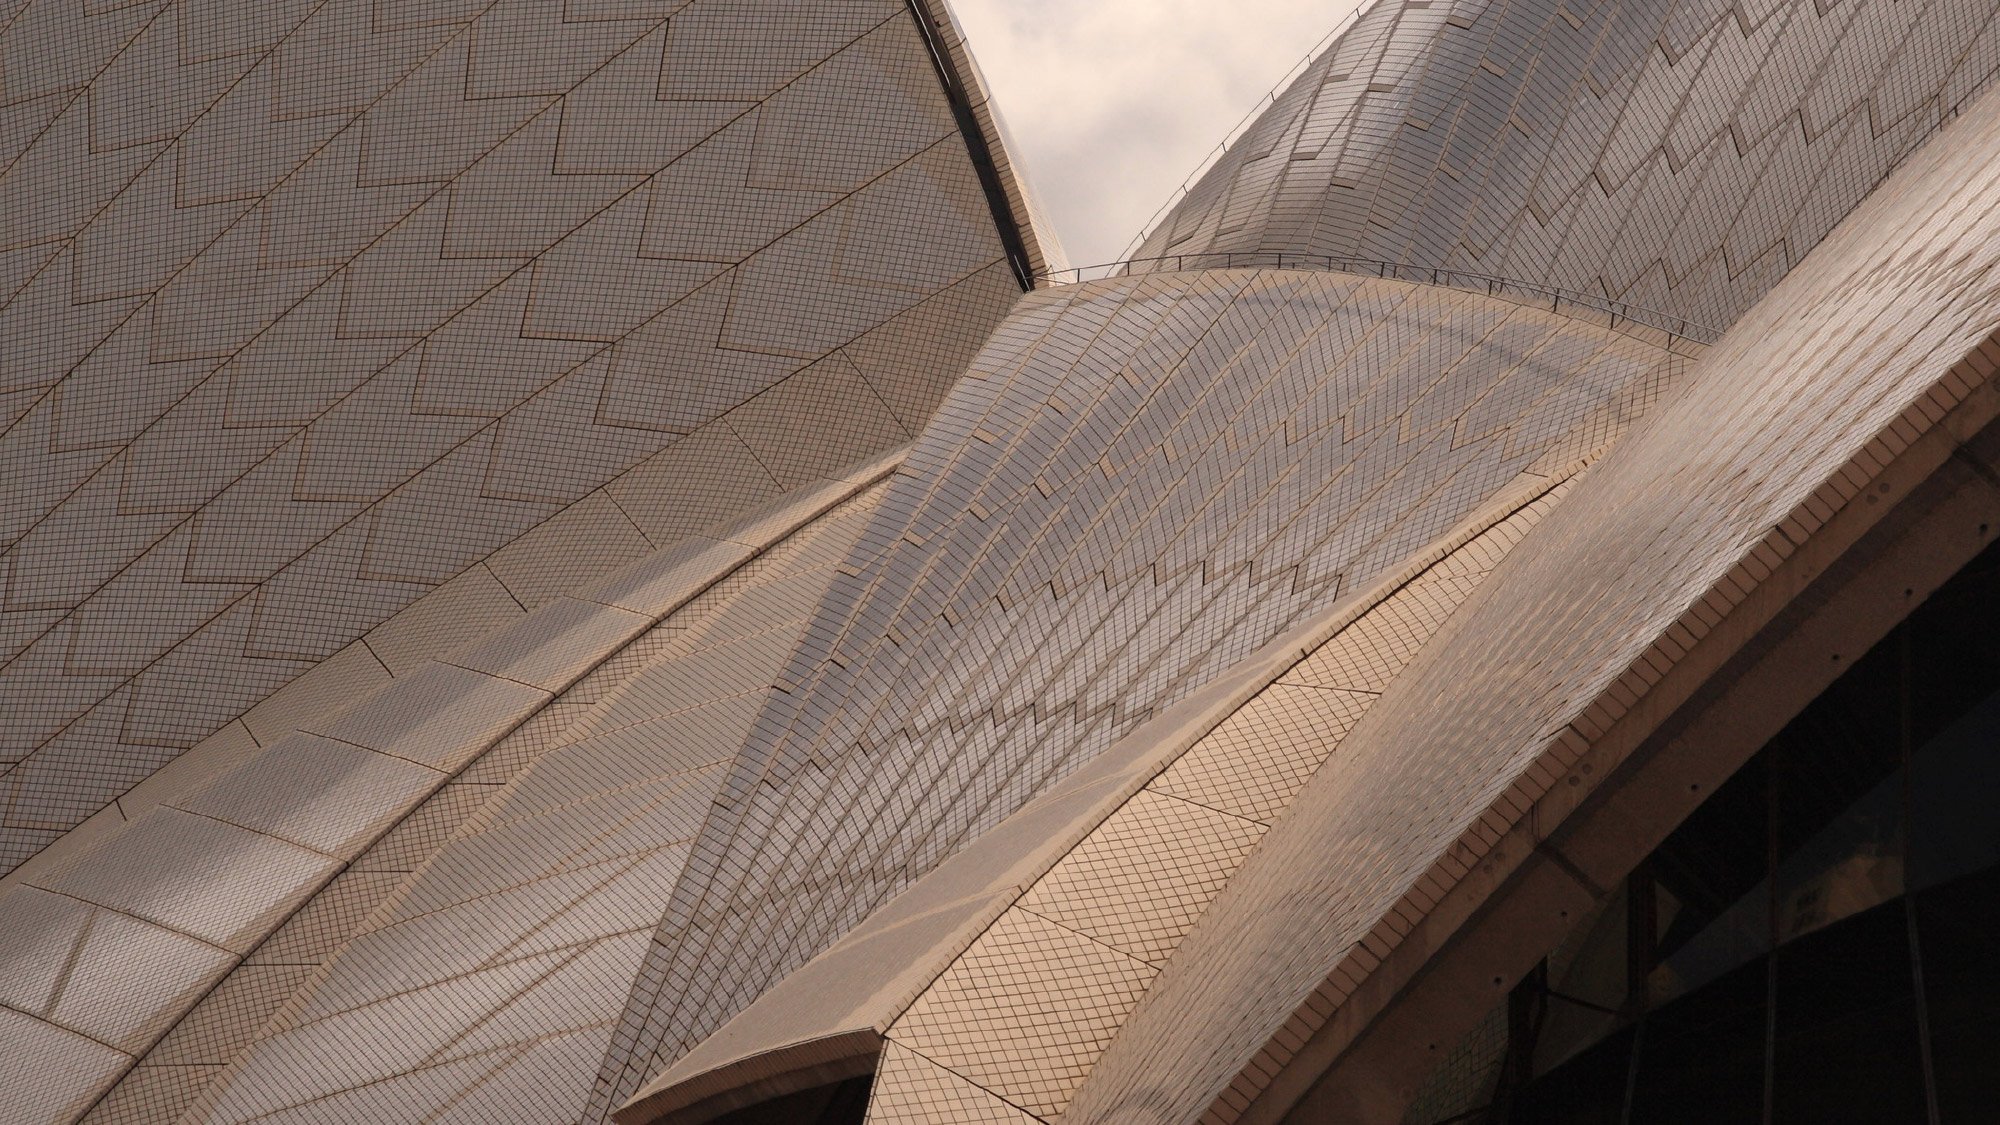 Sydney Opera House roof close up